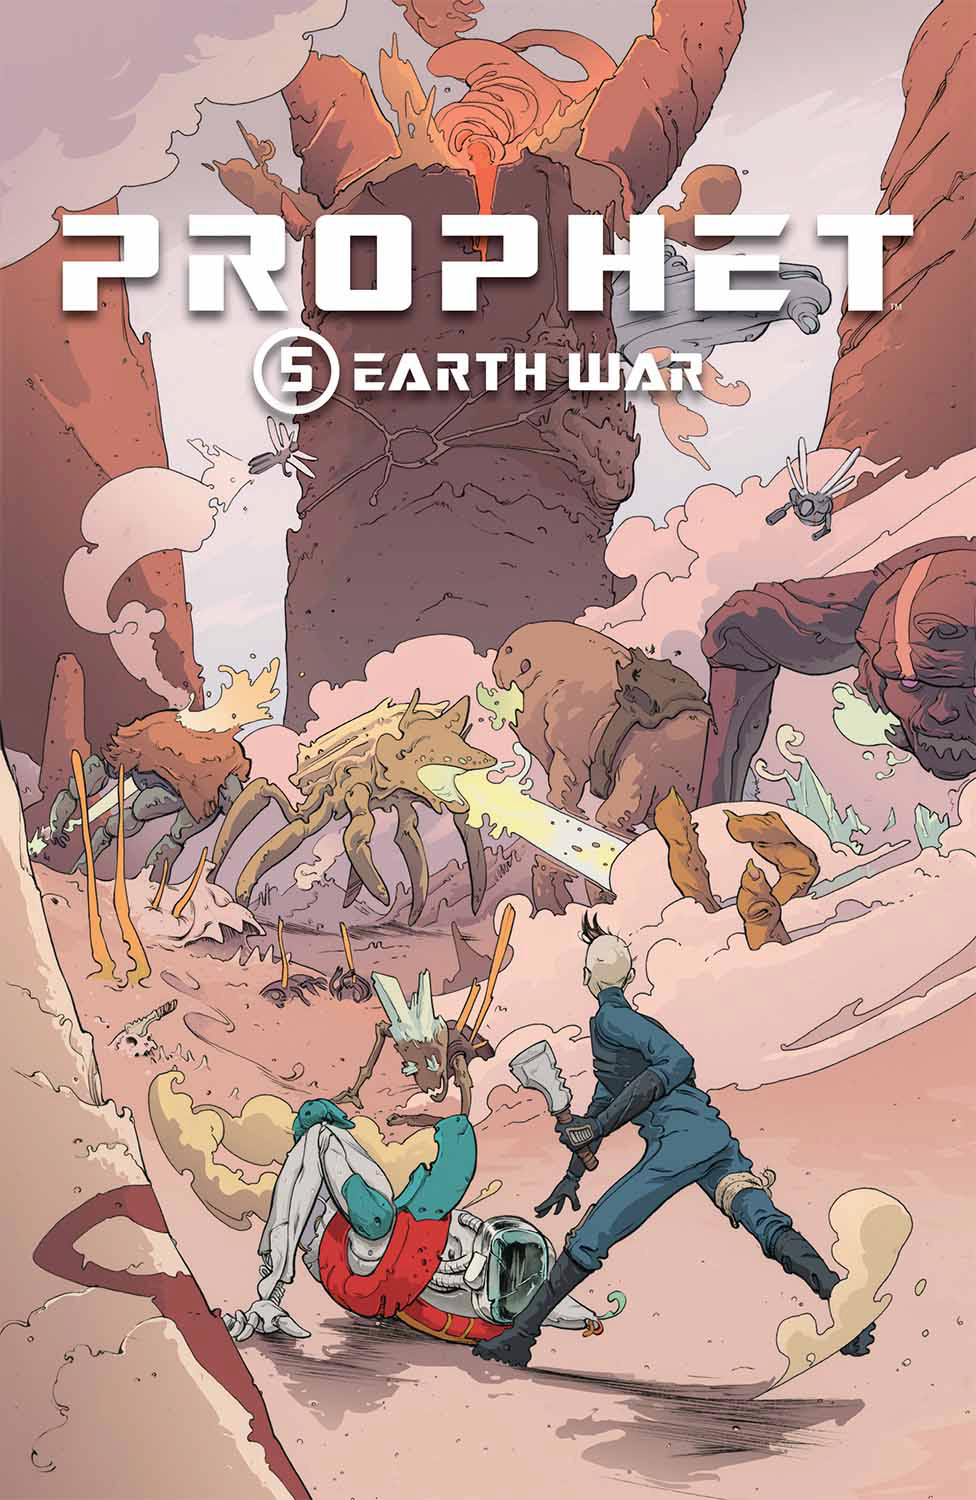 Prophet Graphic Novel Volume 5 Earth War (Mature)